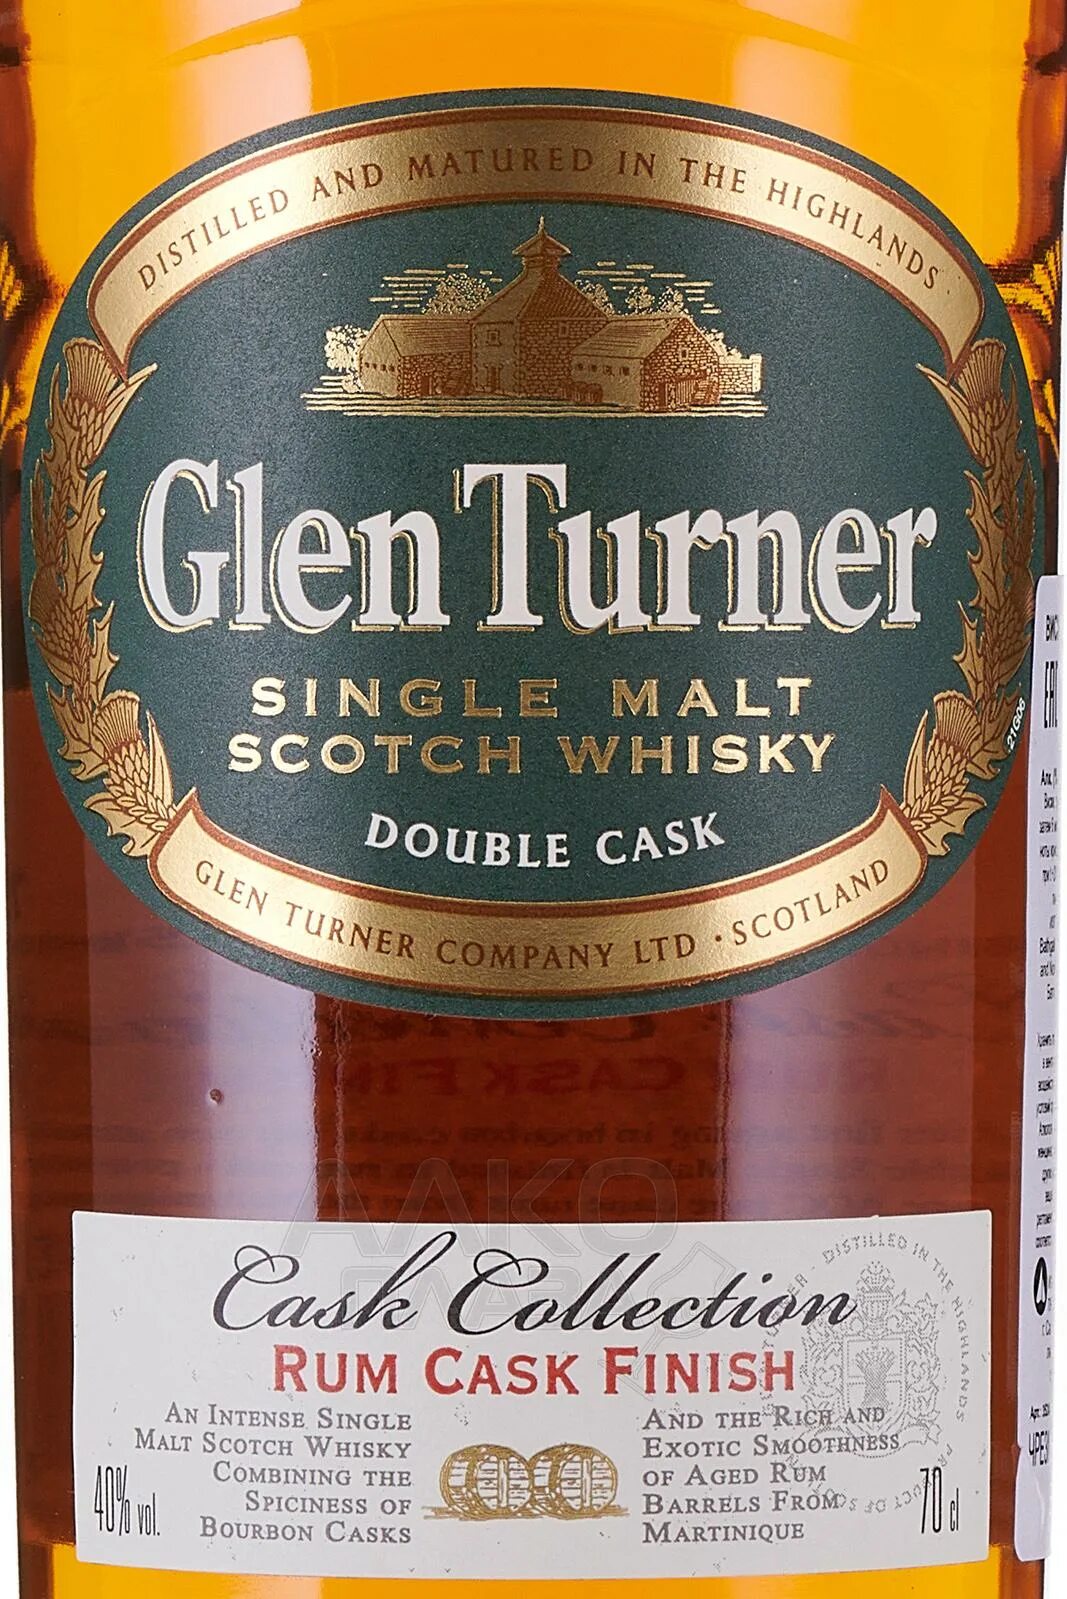 Сингл Молт Глен Тернер. Виски сингл Молт Глен Тернер. Glen Turner виски rum. Glen Turner Single Malt Heritage Double Cask. Glen turner цена 0.7